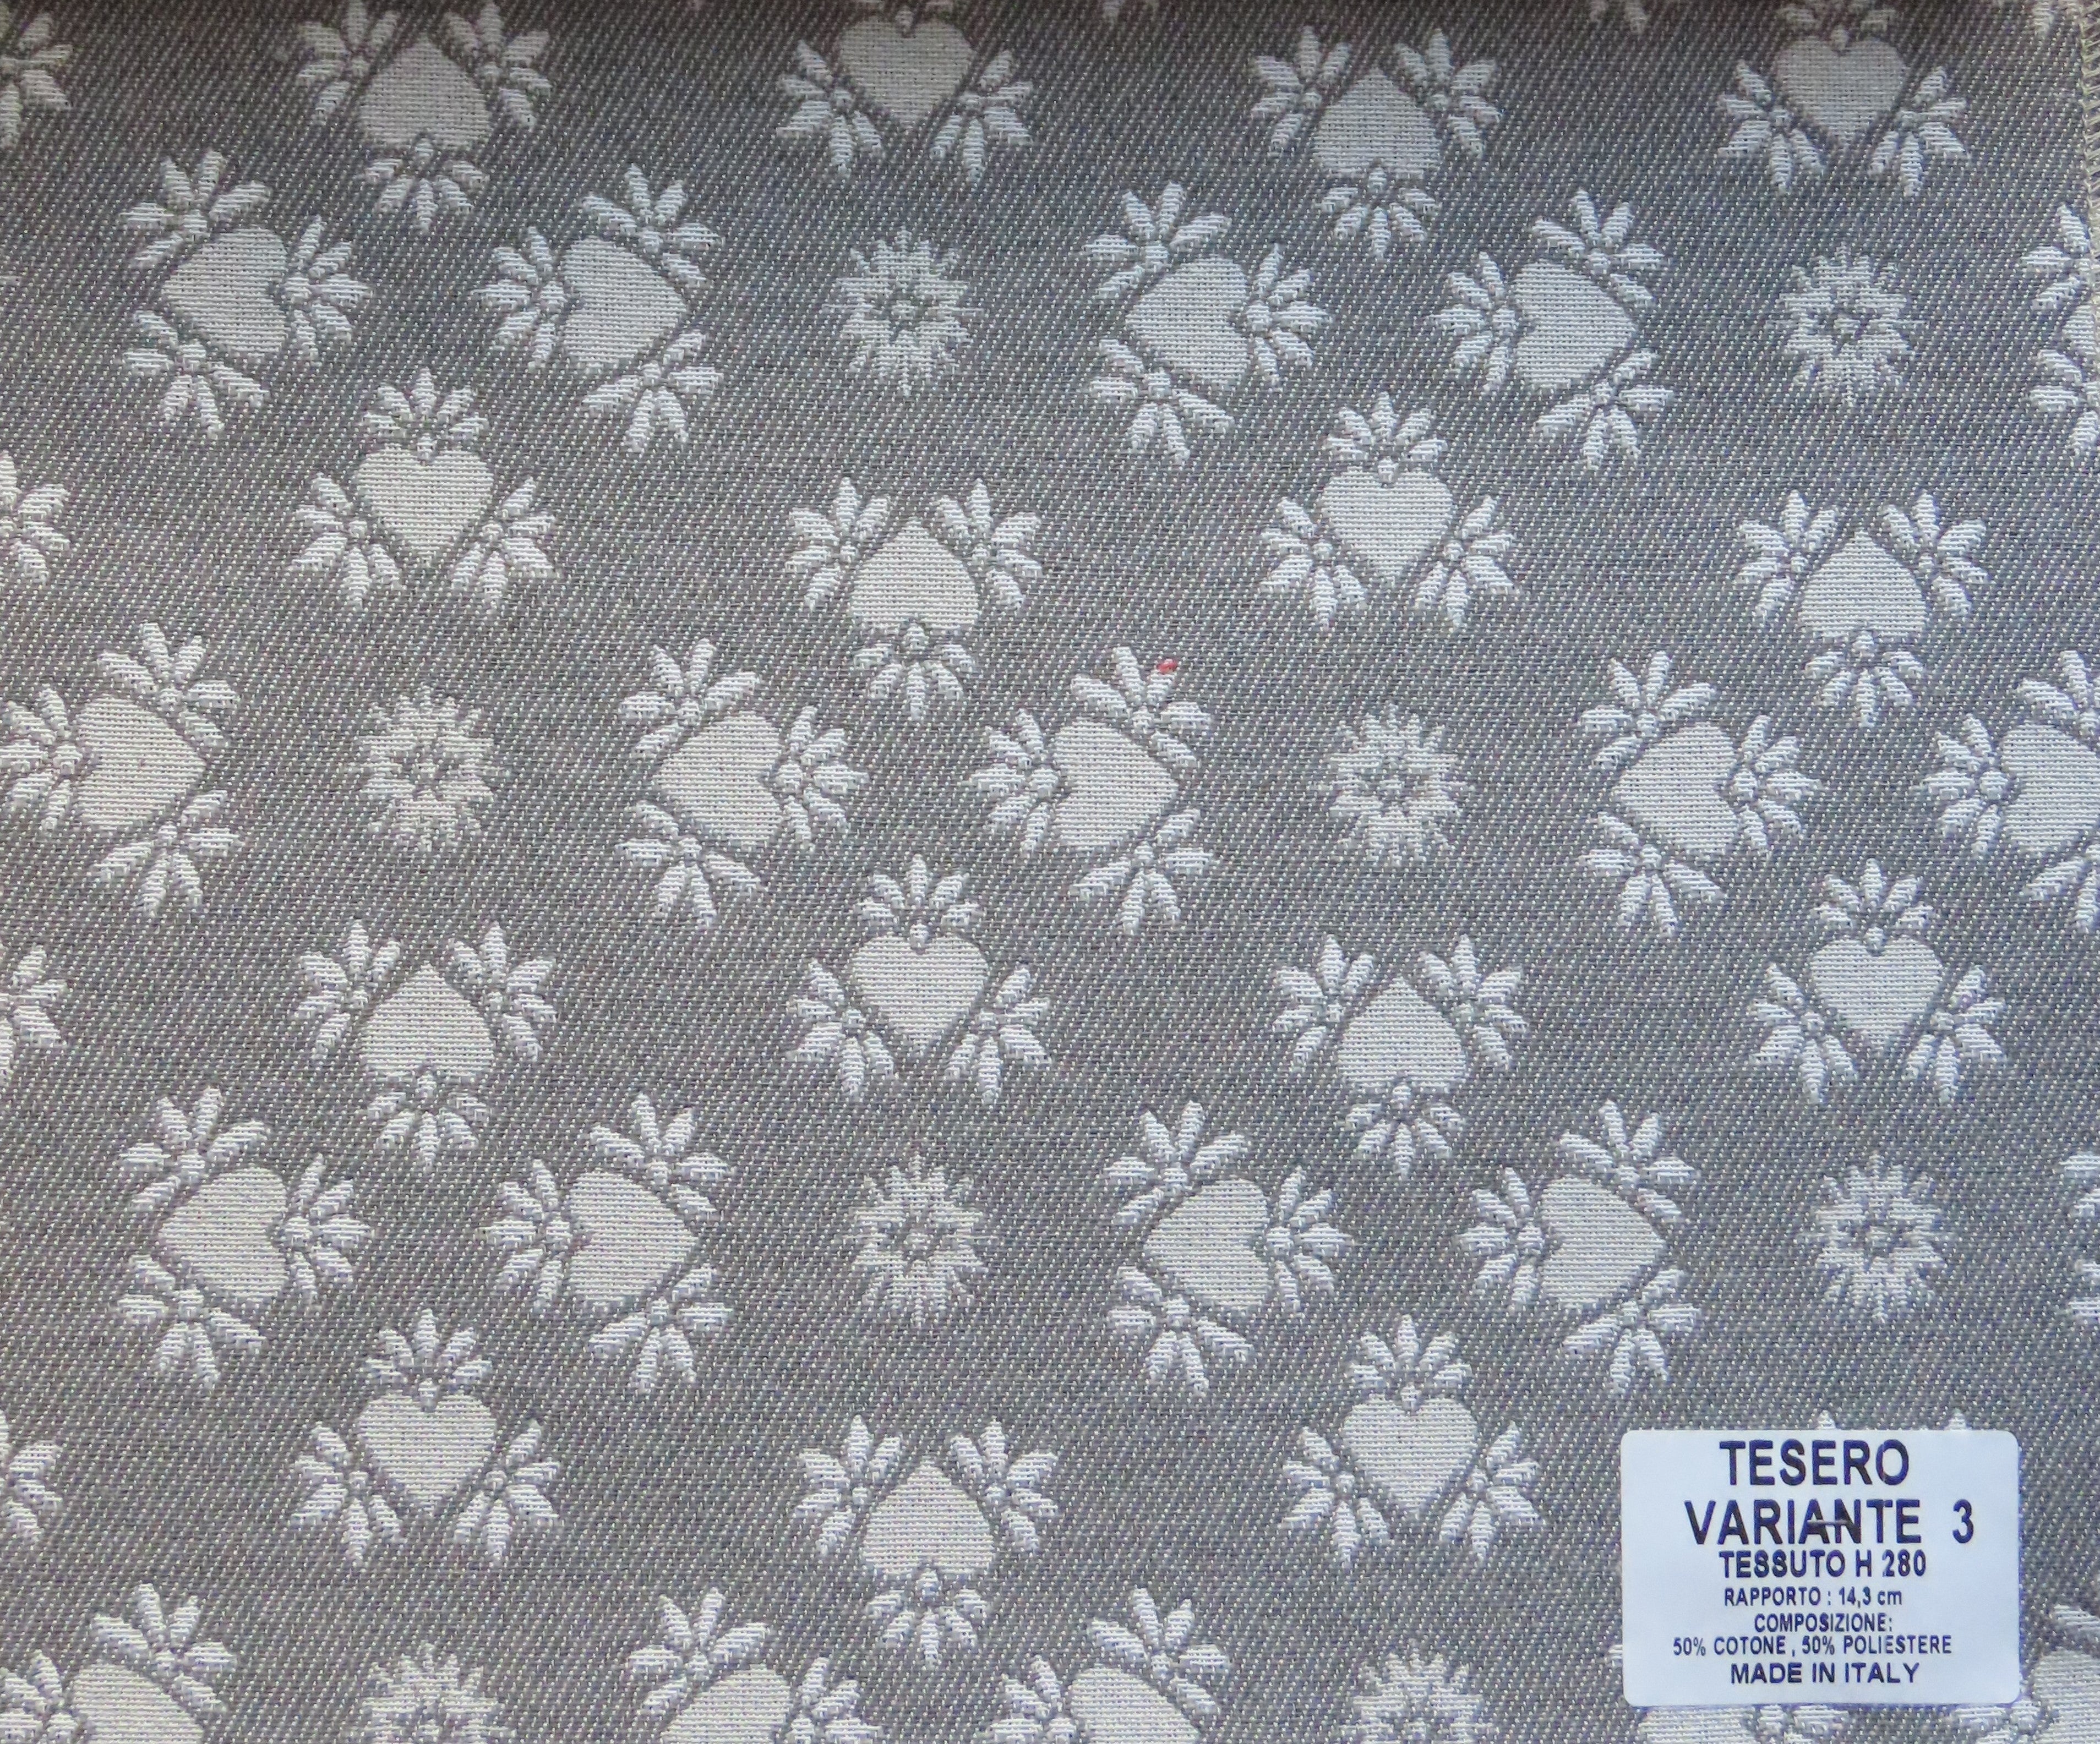 Tessuto in stile tirolese made in italy